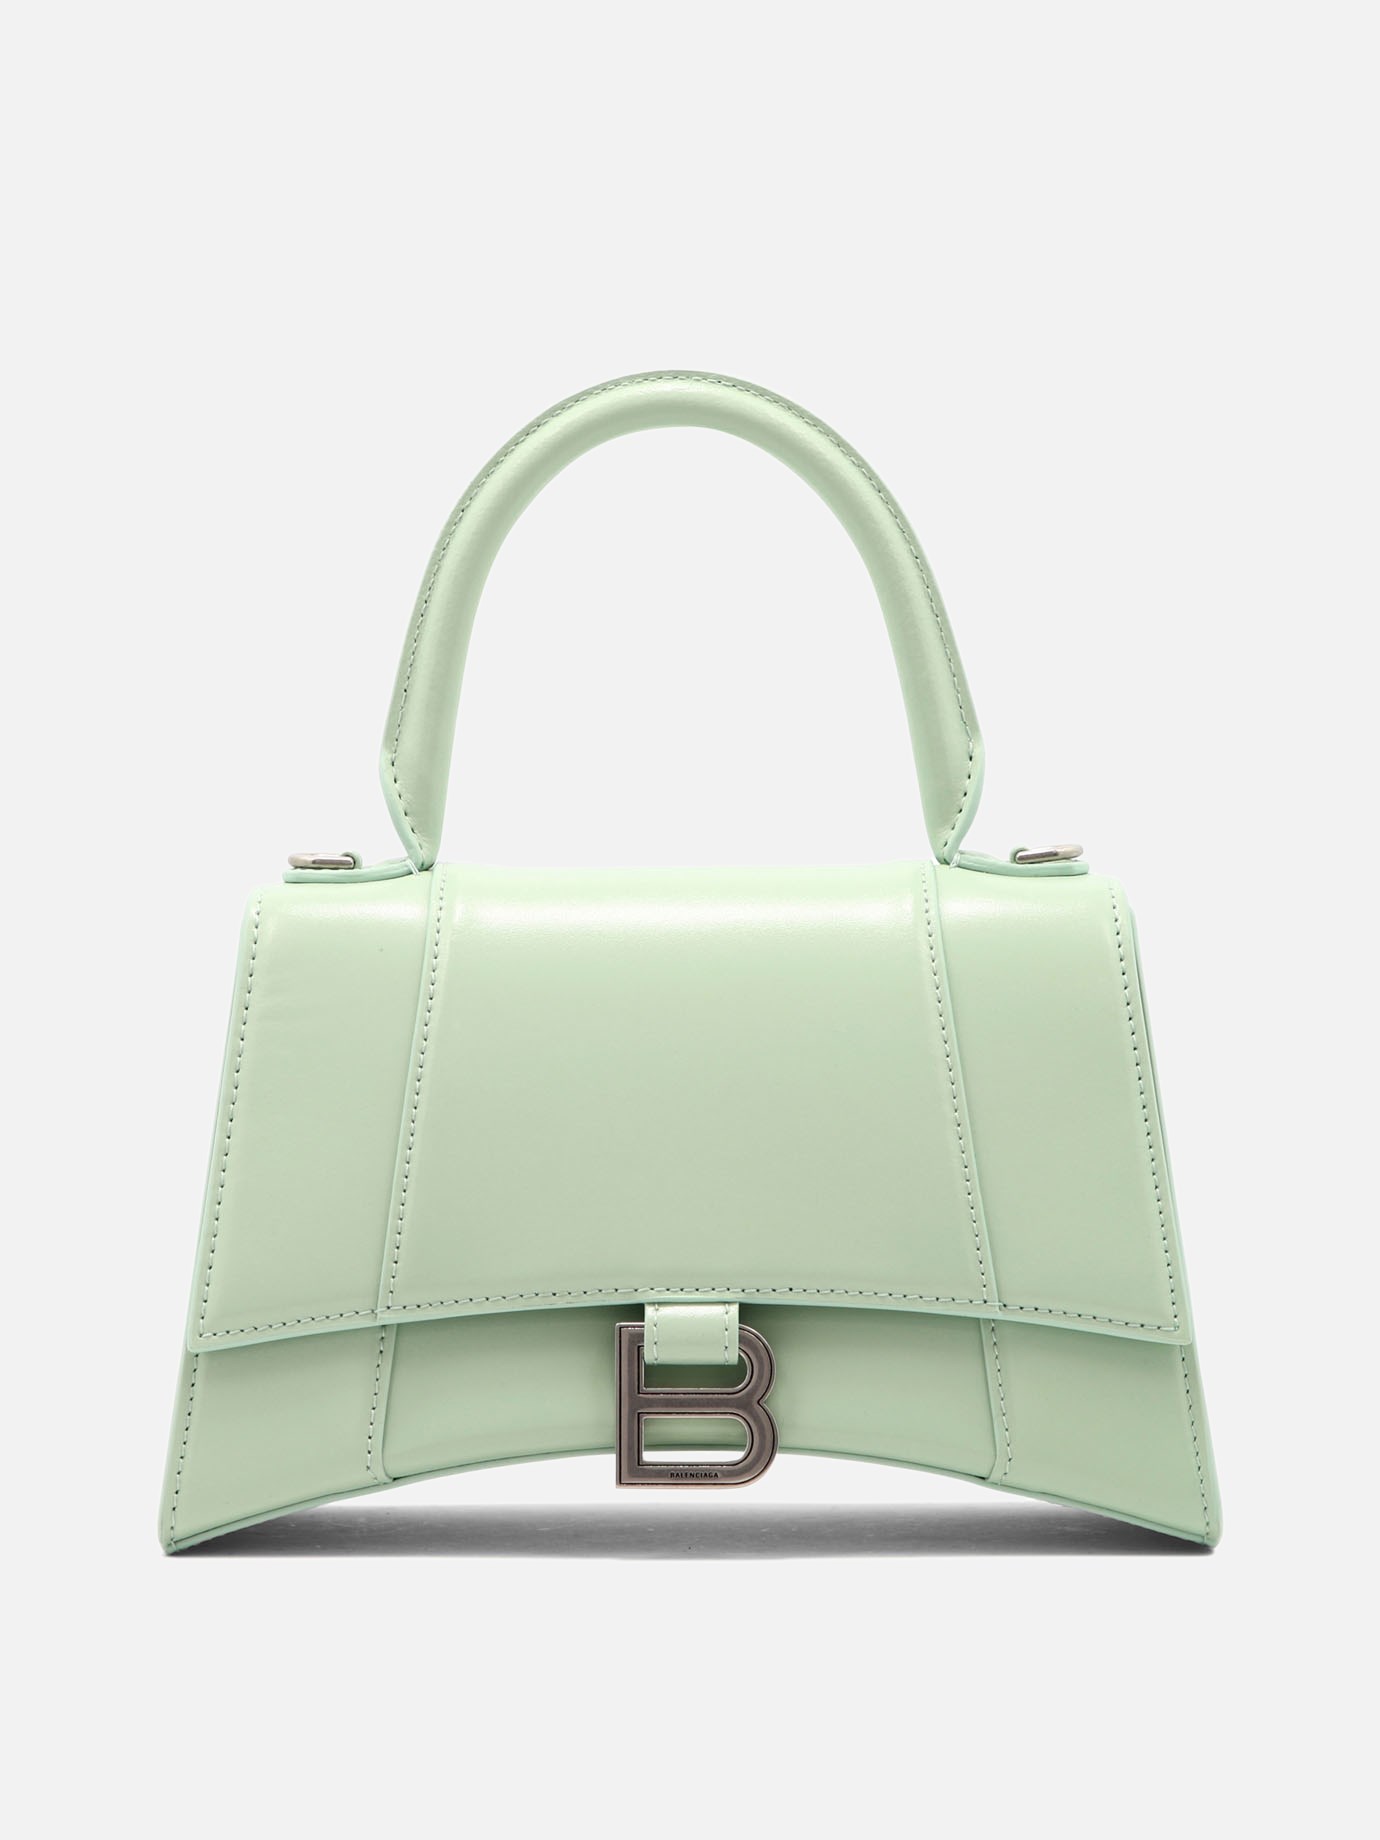  Hourglass  handbag by Balenciaga